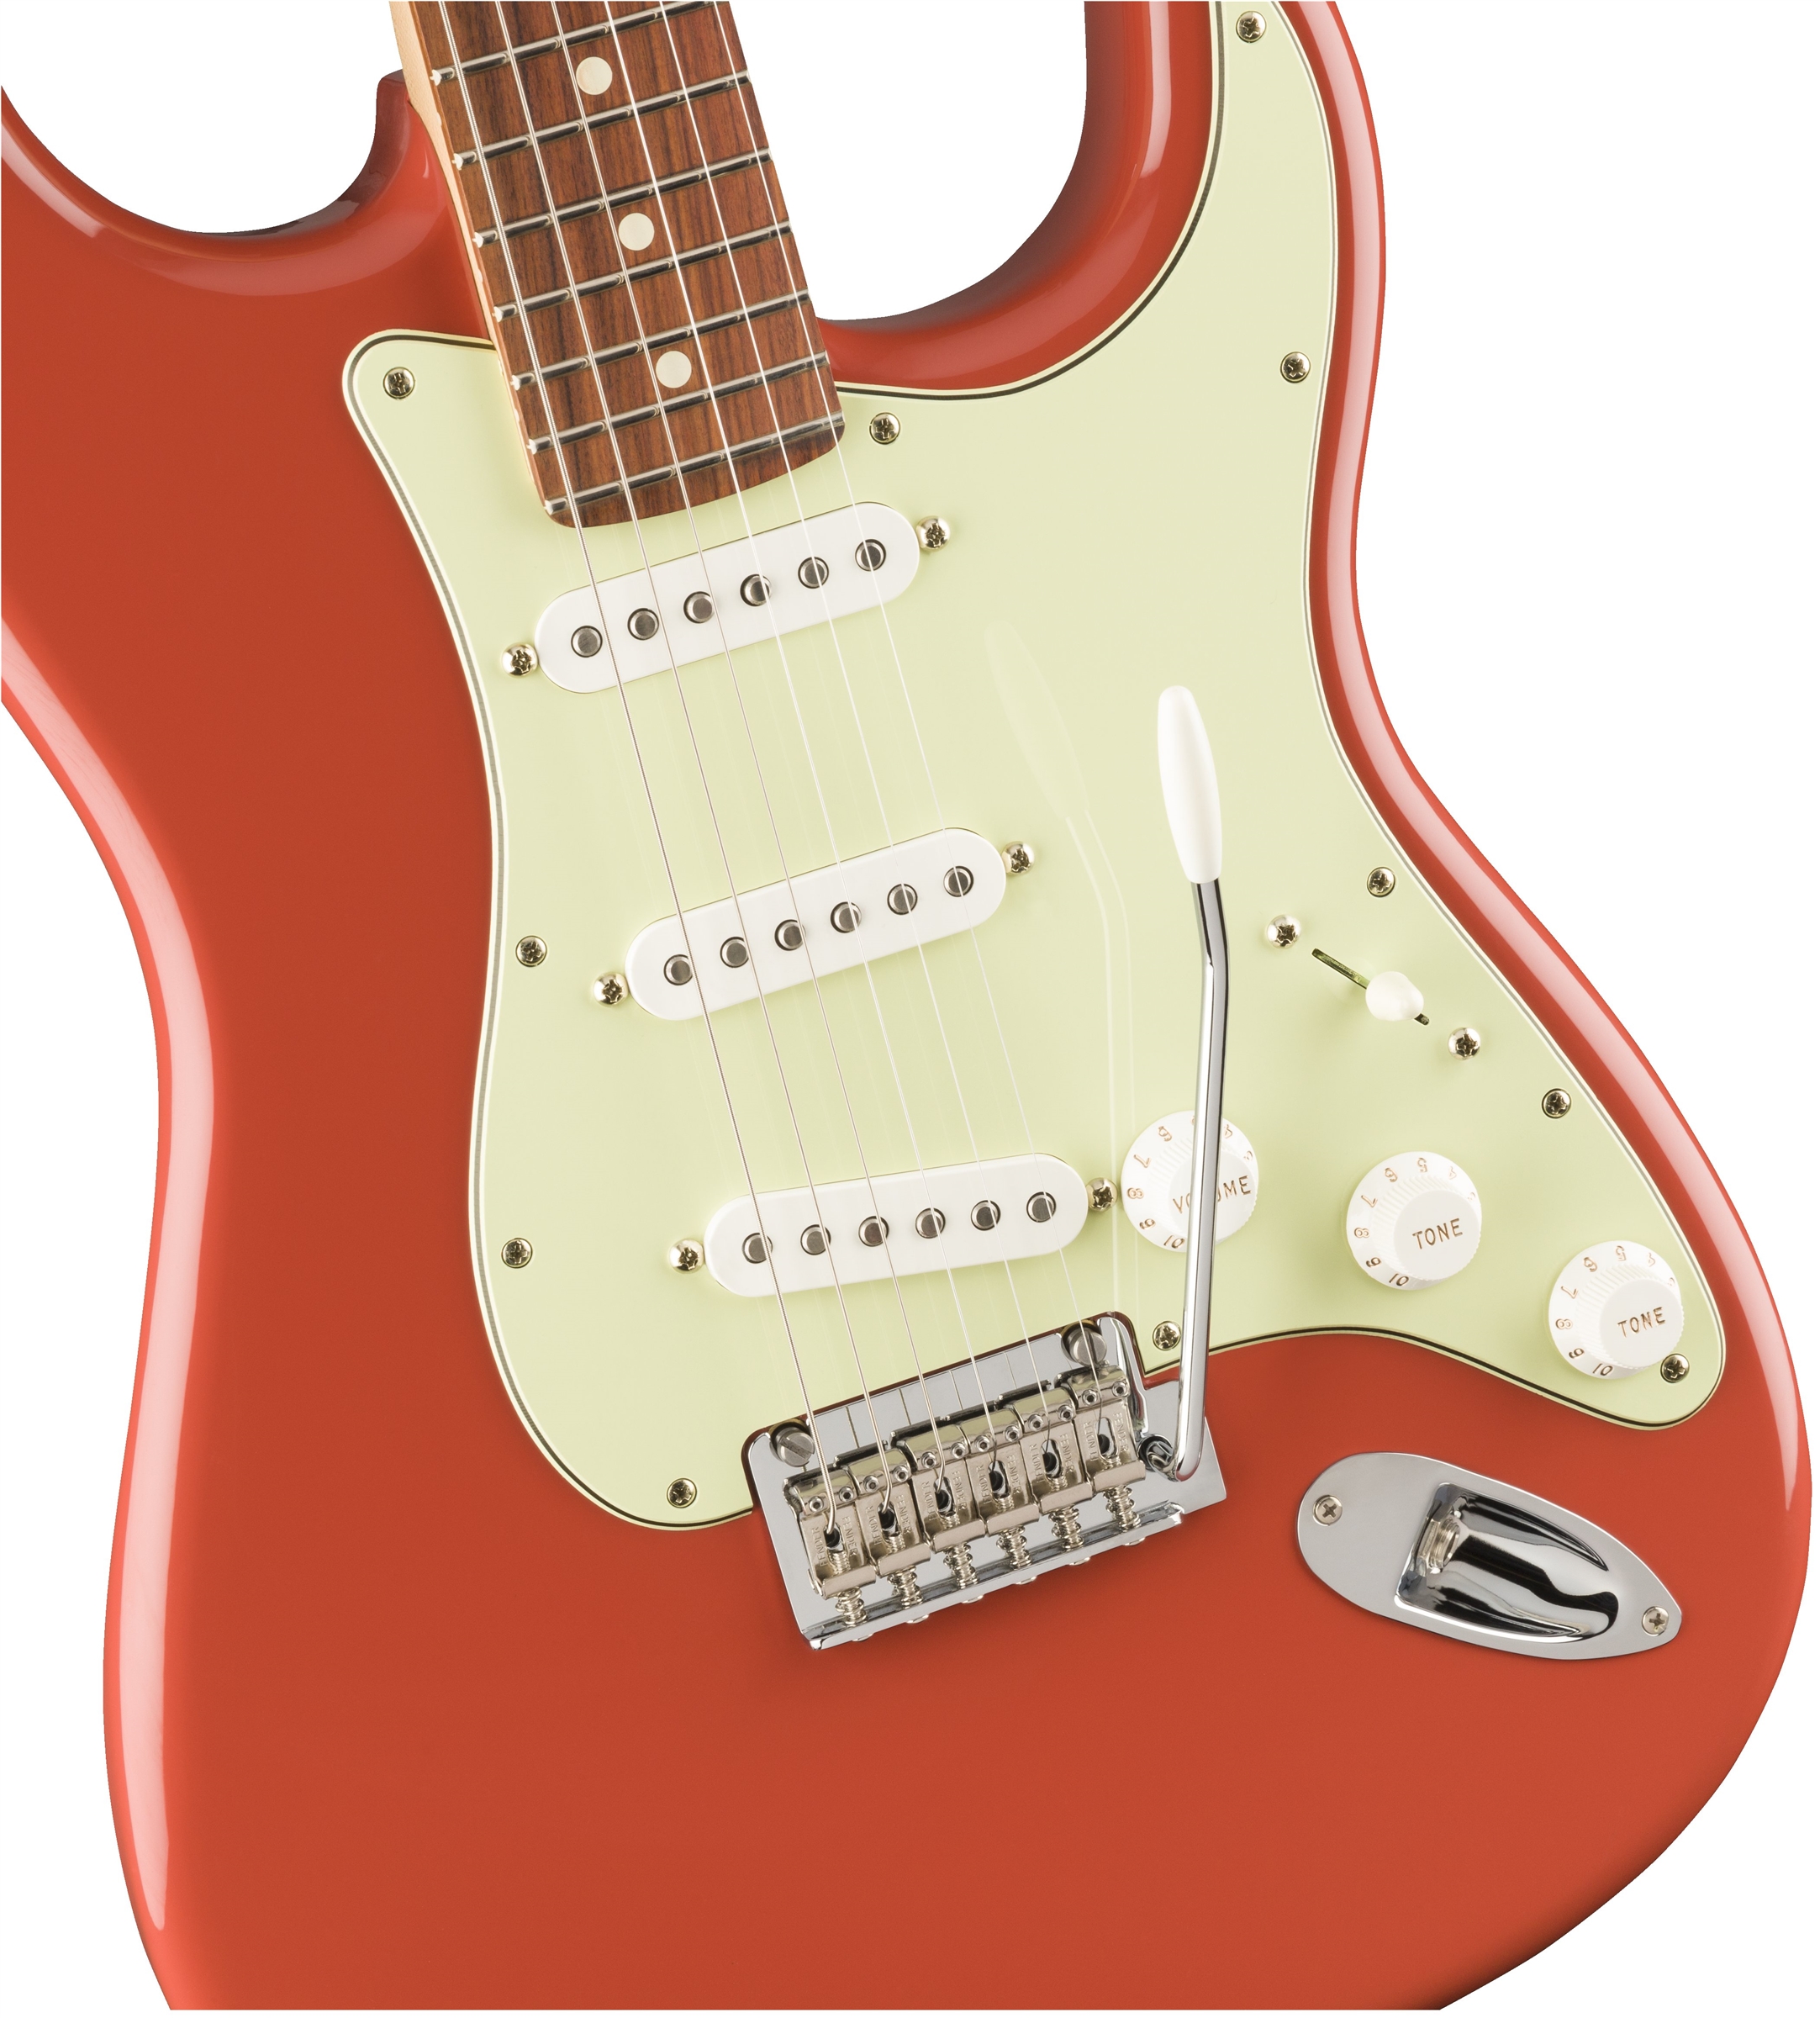 Fender Strat Player Ltd Mex 3s Trem Pf - Fiesta Red - E-Gitarre in Str-Form - Variation 2